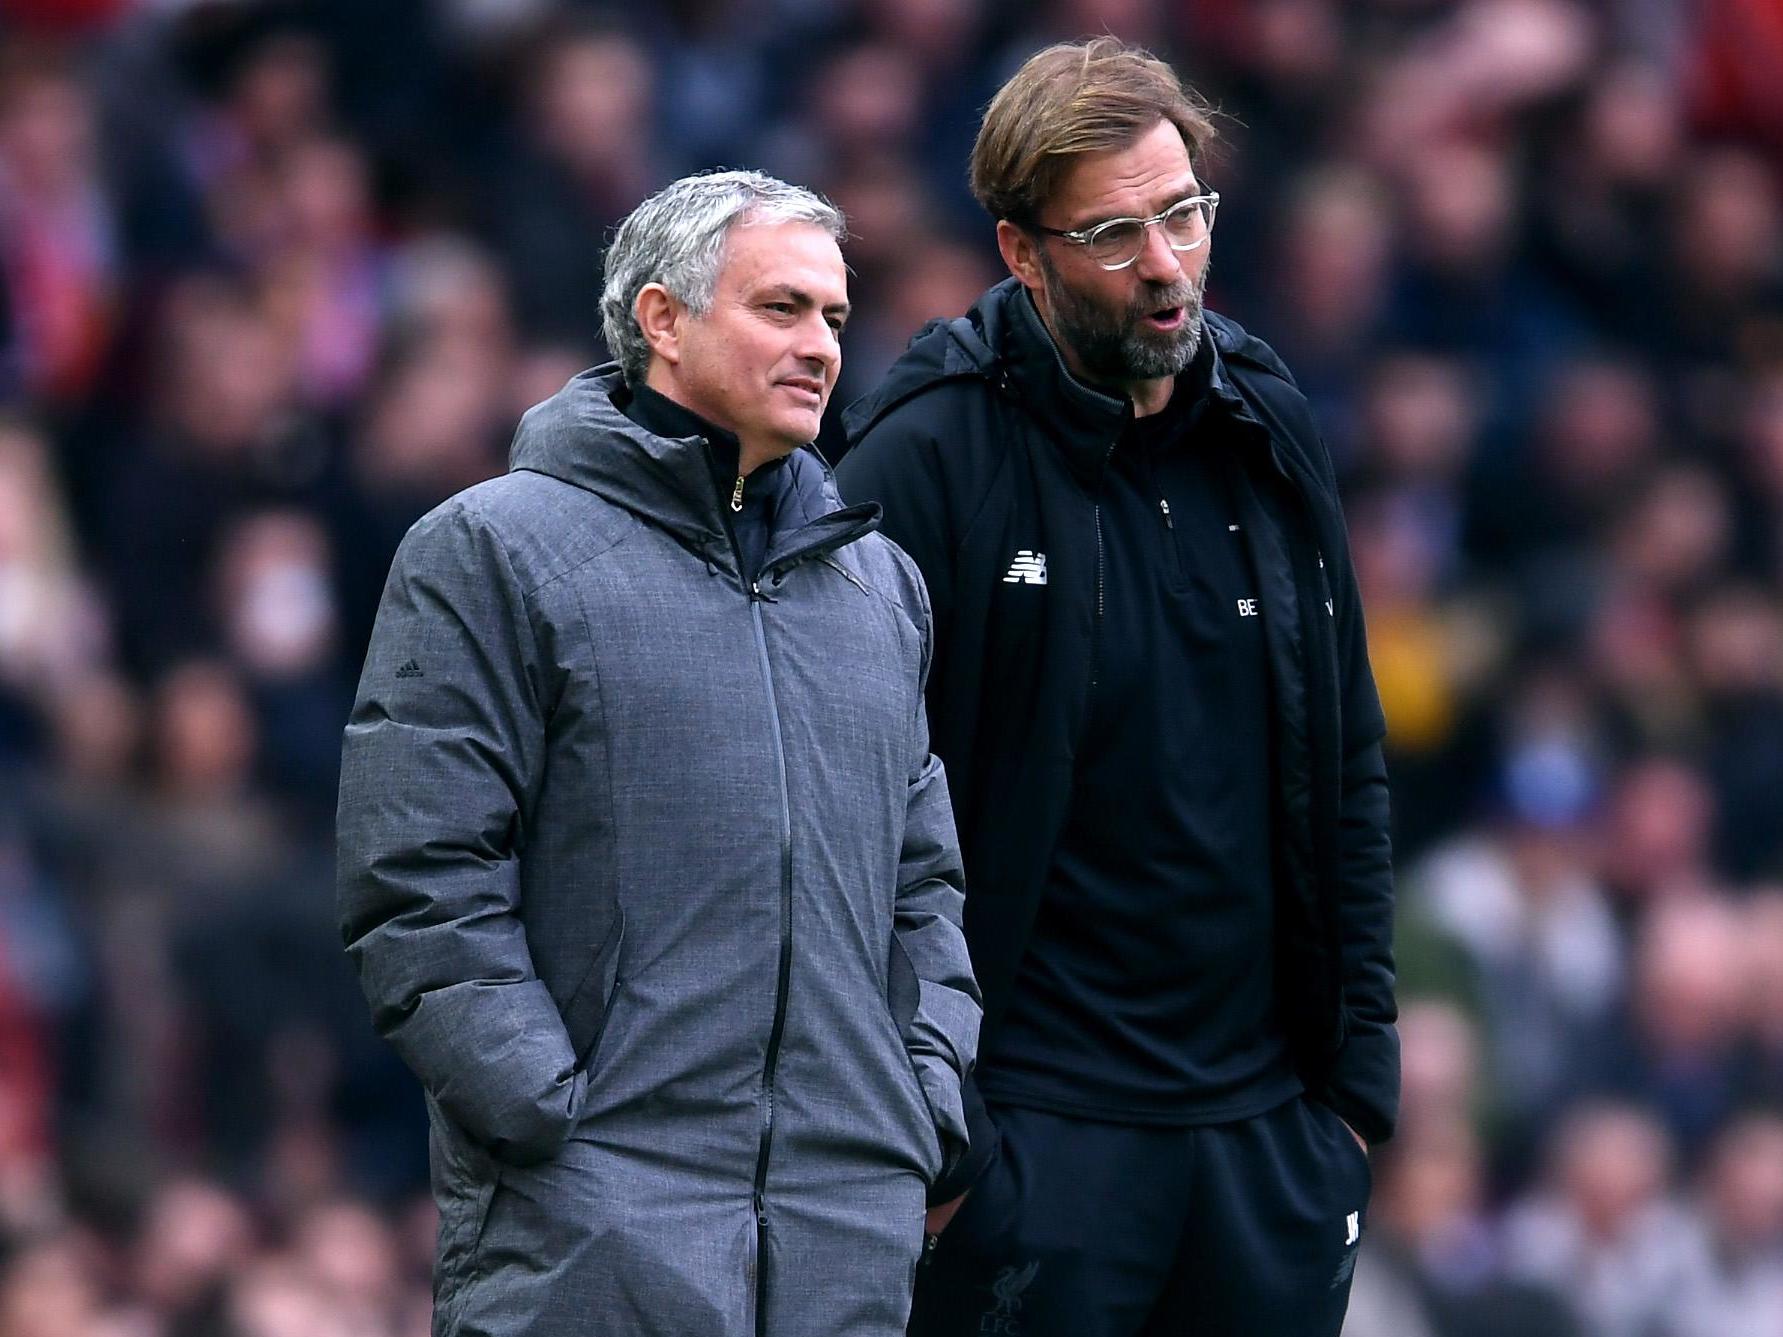 Jose Mourinho and Jurgen Klopp go head to head on Sunday